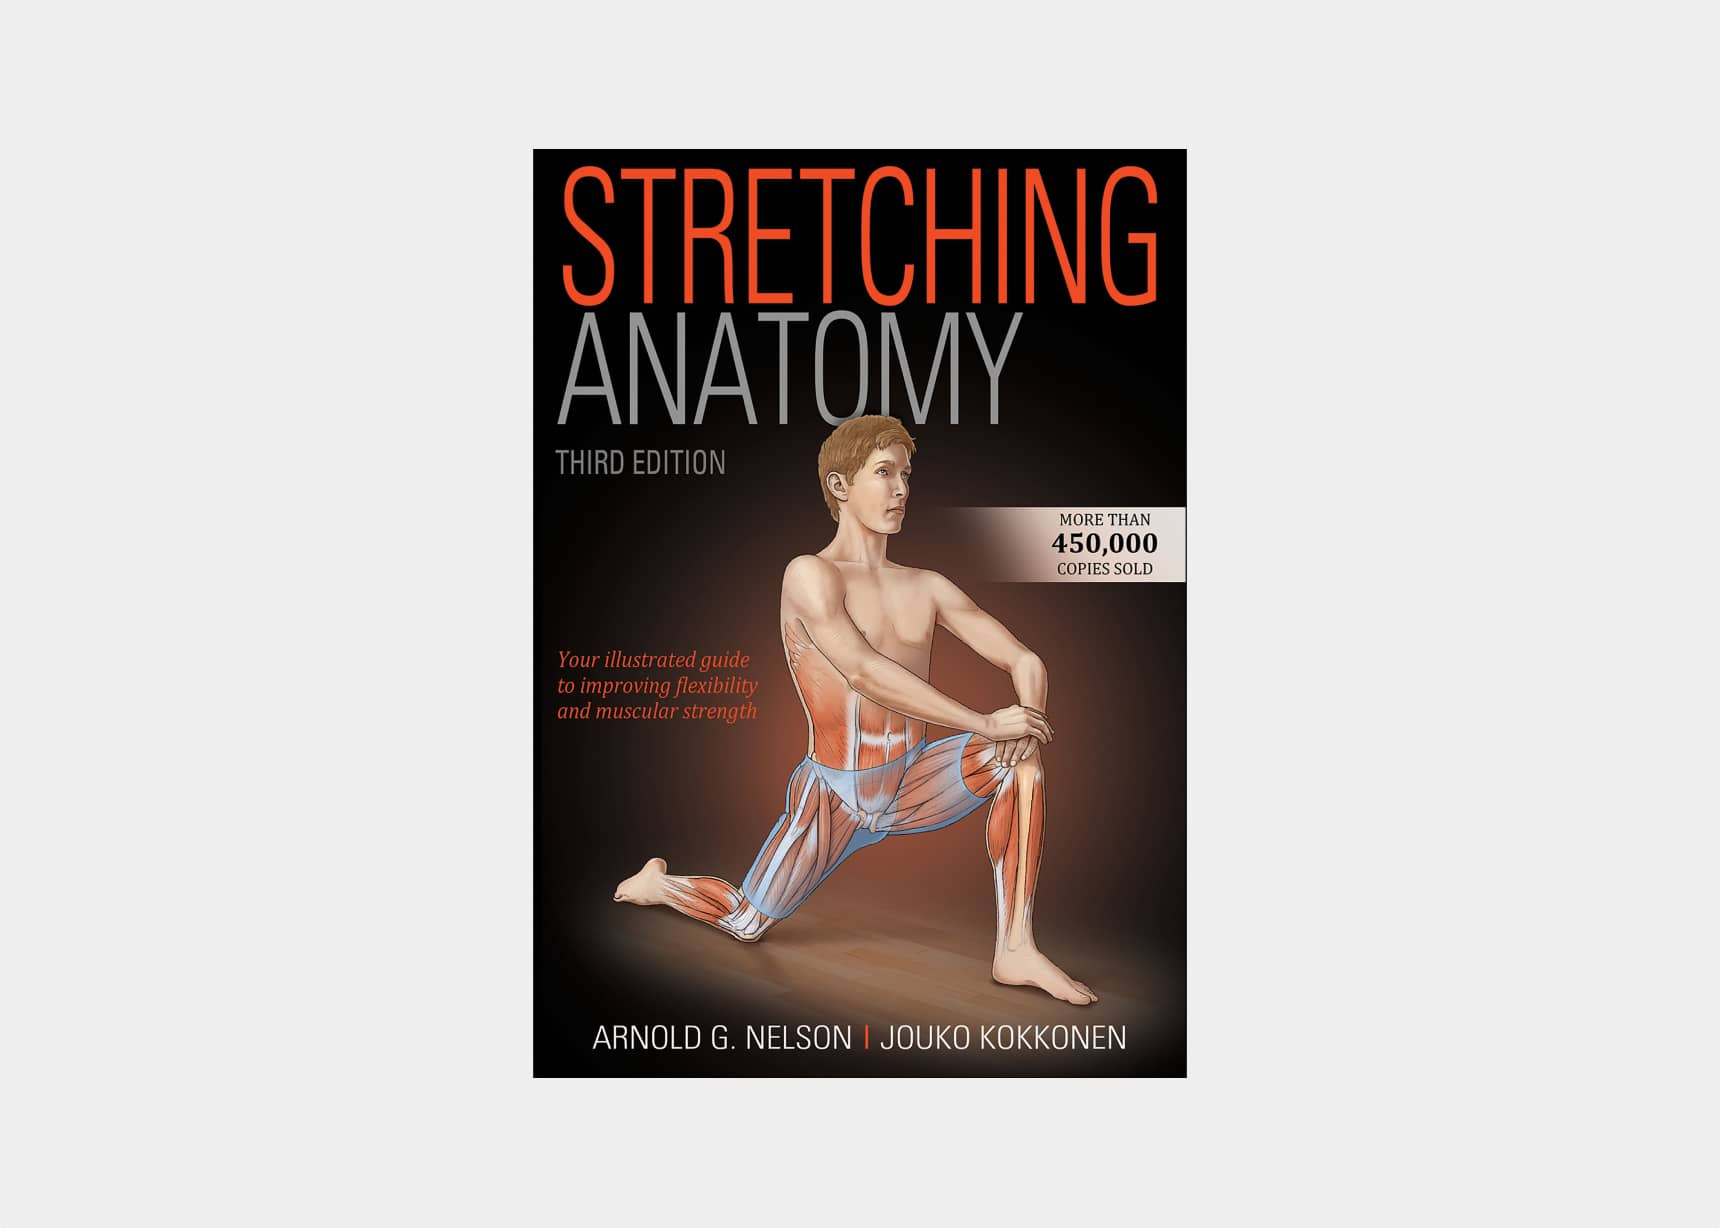 Stretching Anatomy, third edition by Arnold G. Nelson & Jouko Kokkonen